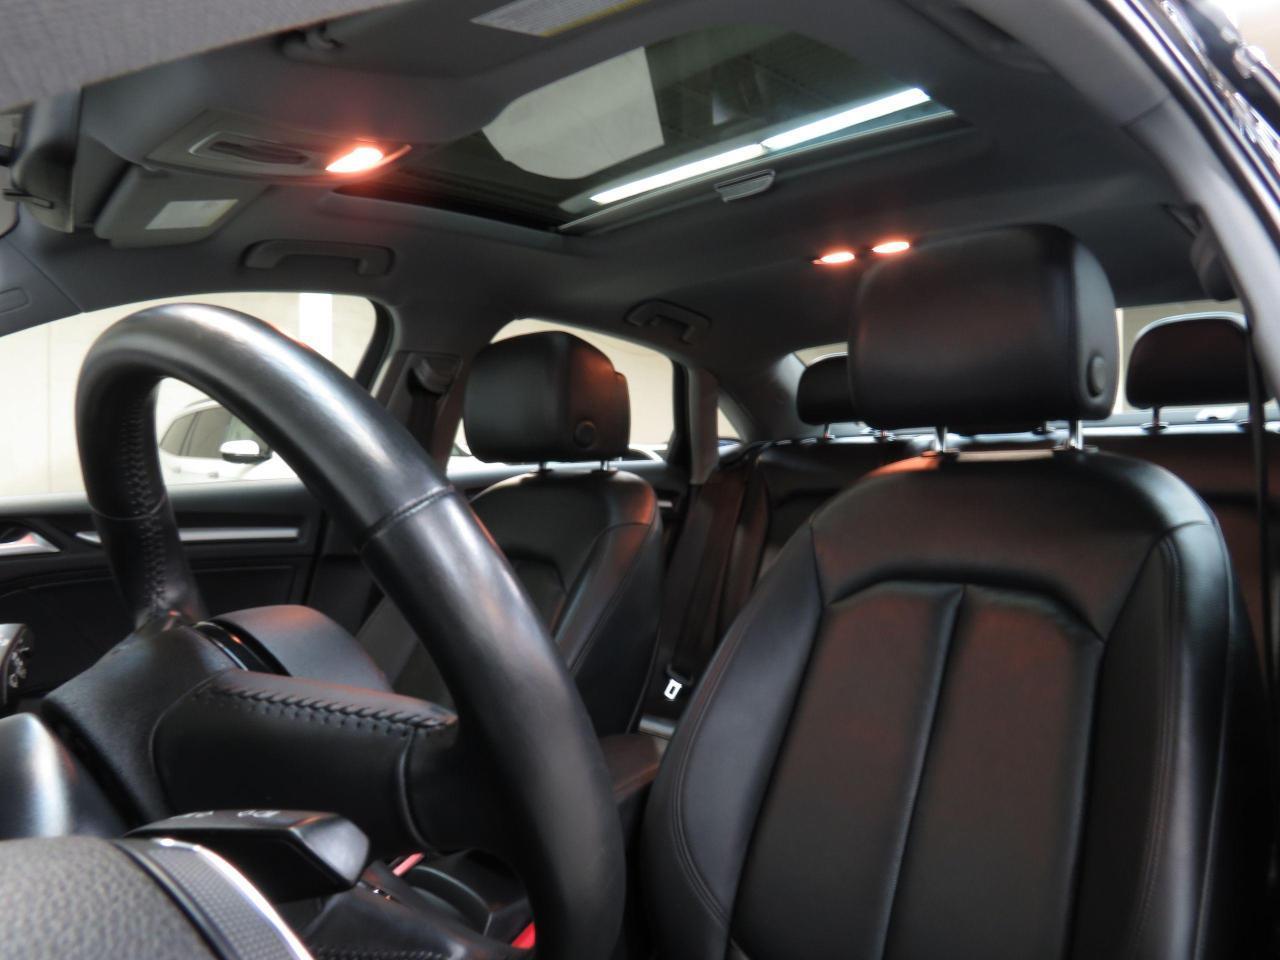 2019 Audi A3 KOMFORT | AWD | Leather | Sunroof | Backup Cam - Photo #12